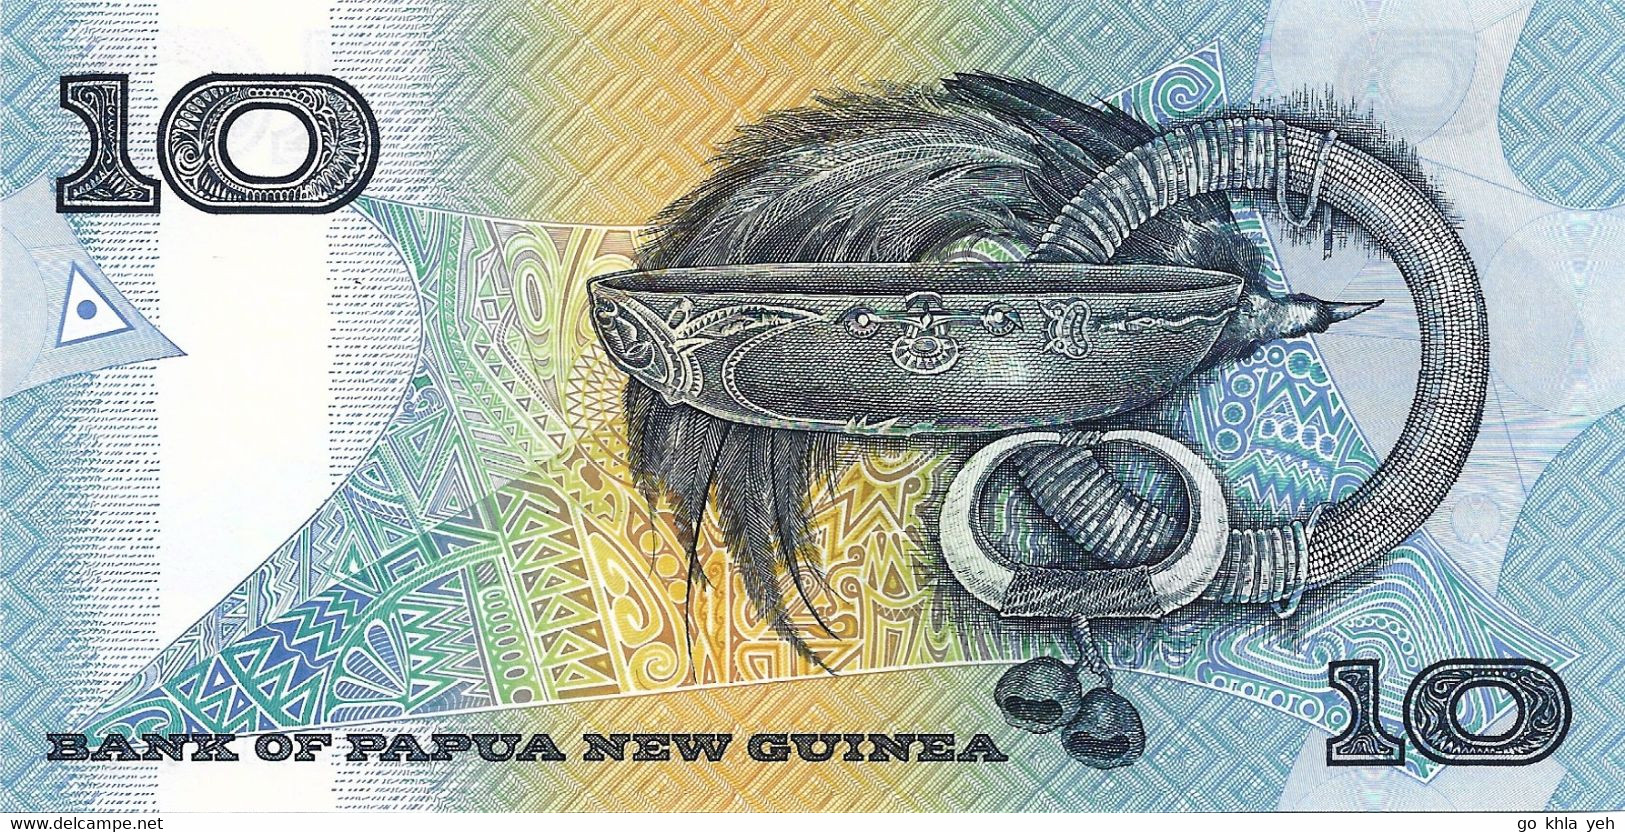 PAPOUASIE - NOUVELLE-GUINEE 1998 10 Kina - P.17a Neuf UNC - Papua-Neuguinea